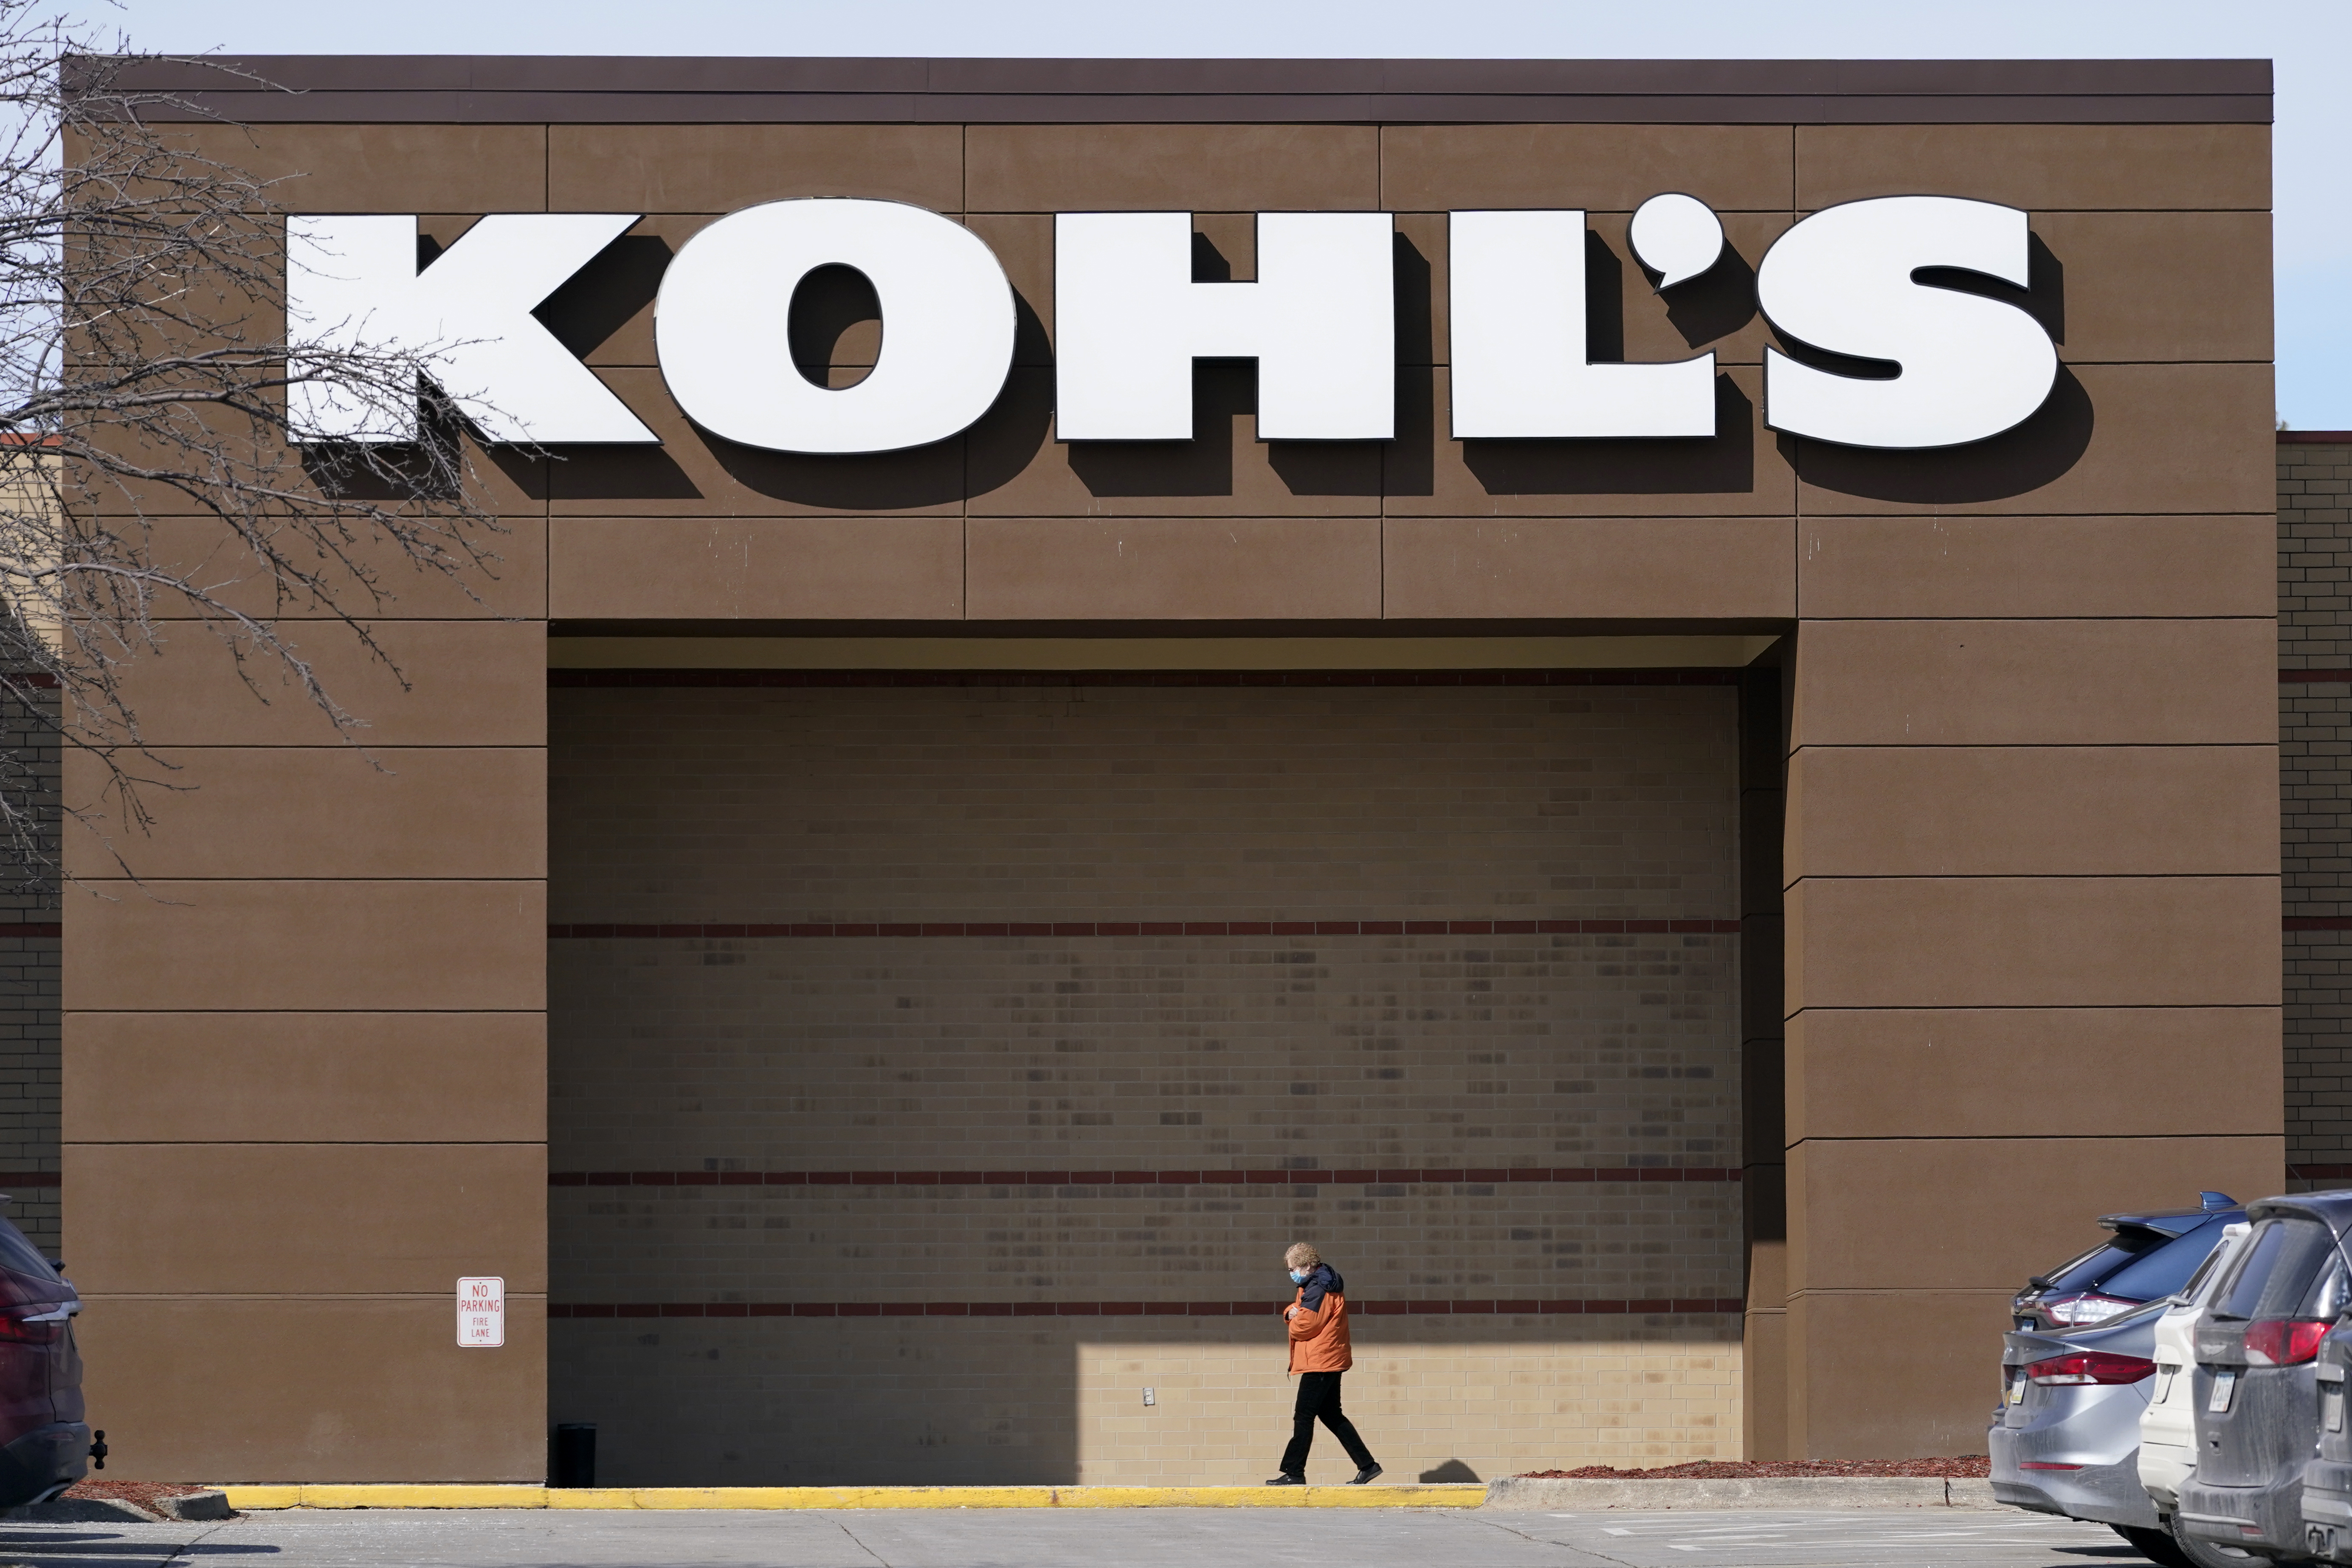 Will Kohl's Go Private? 